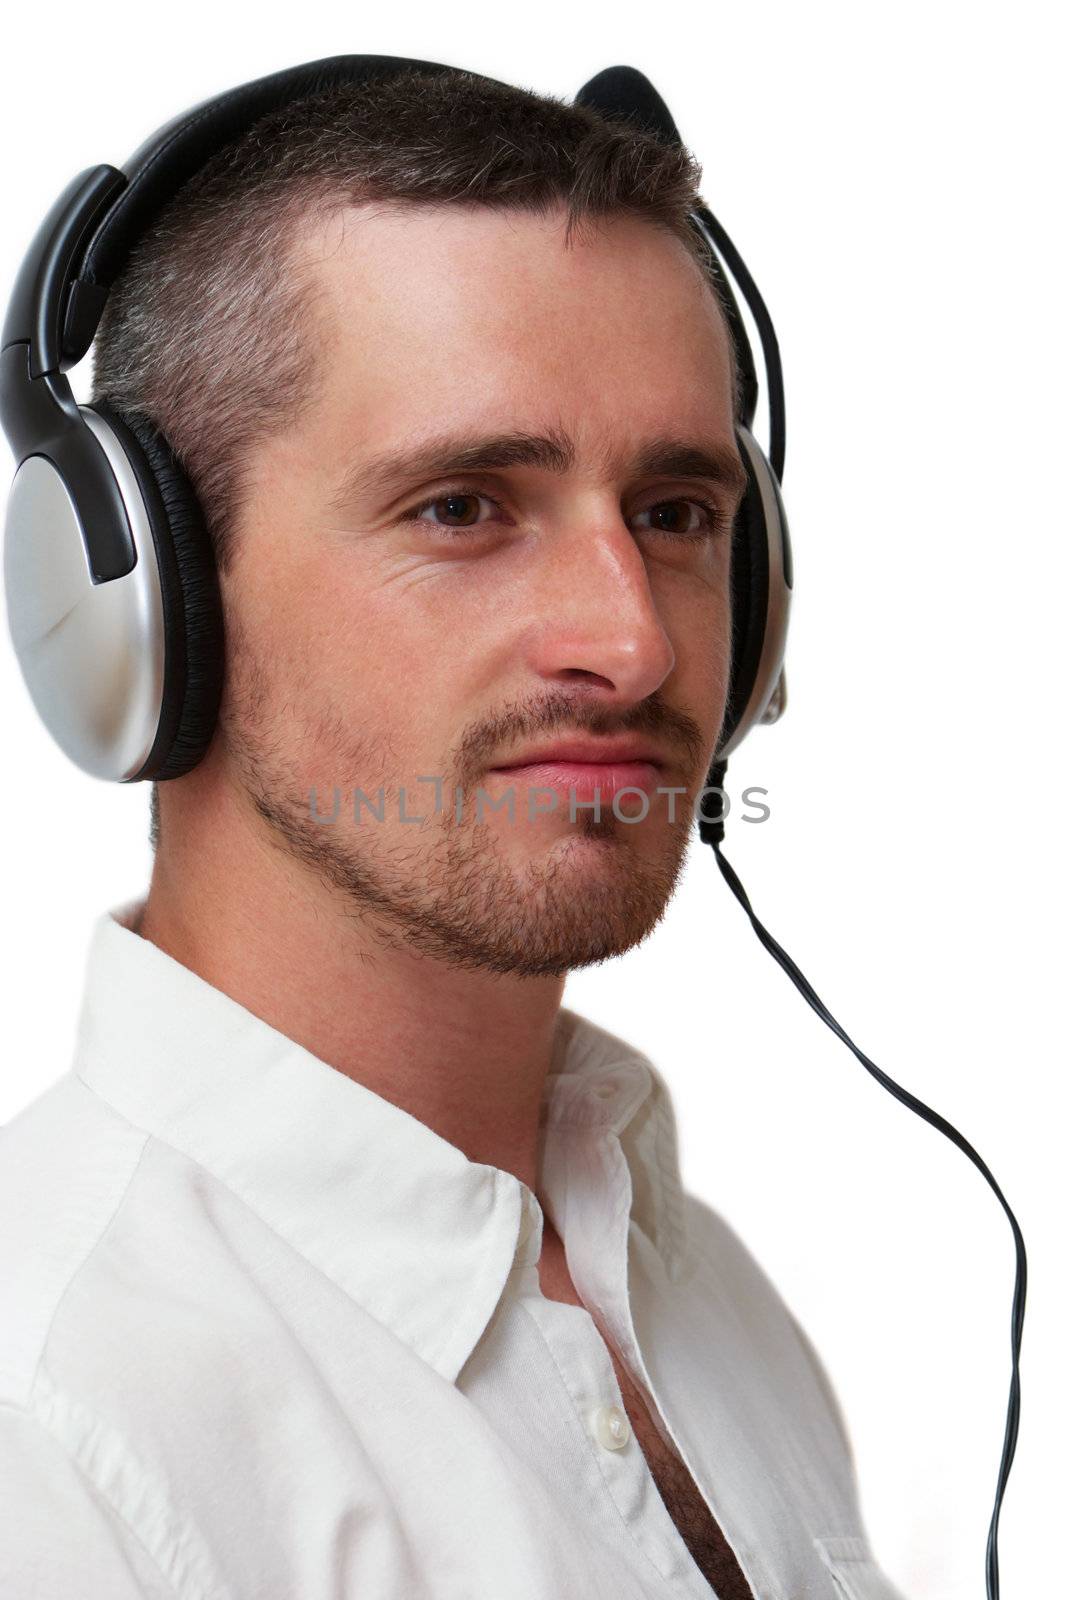 Man with headset by Olinkau